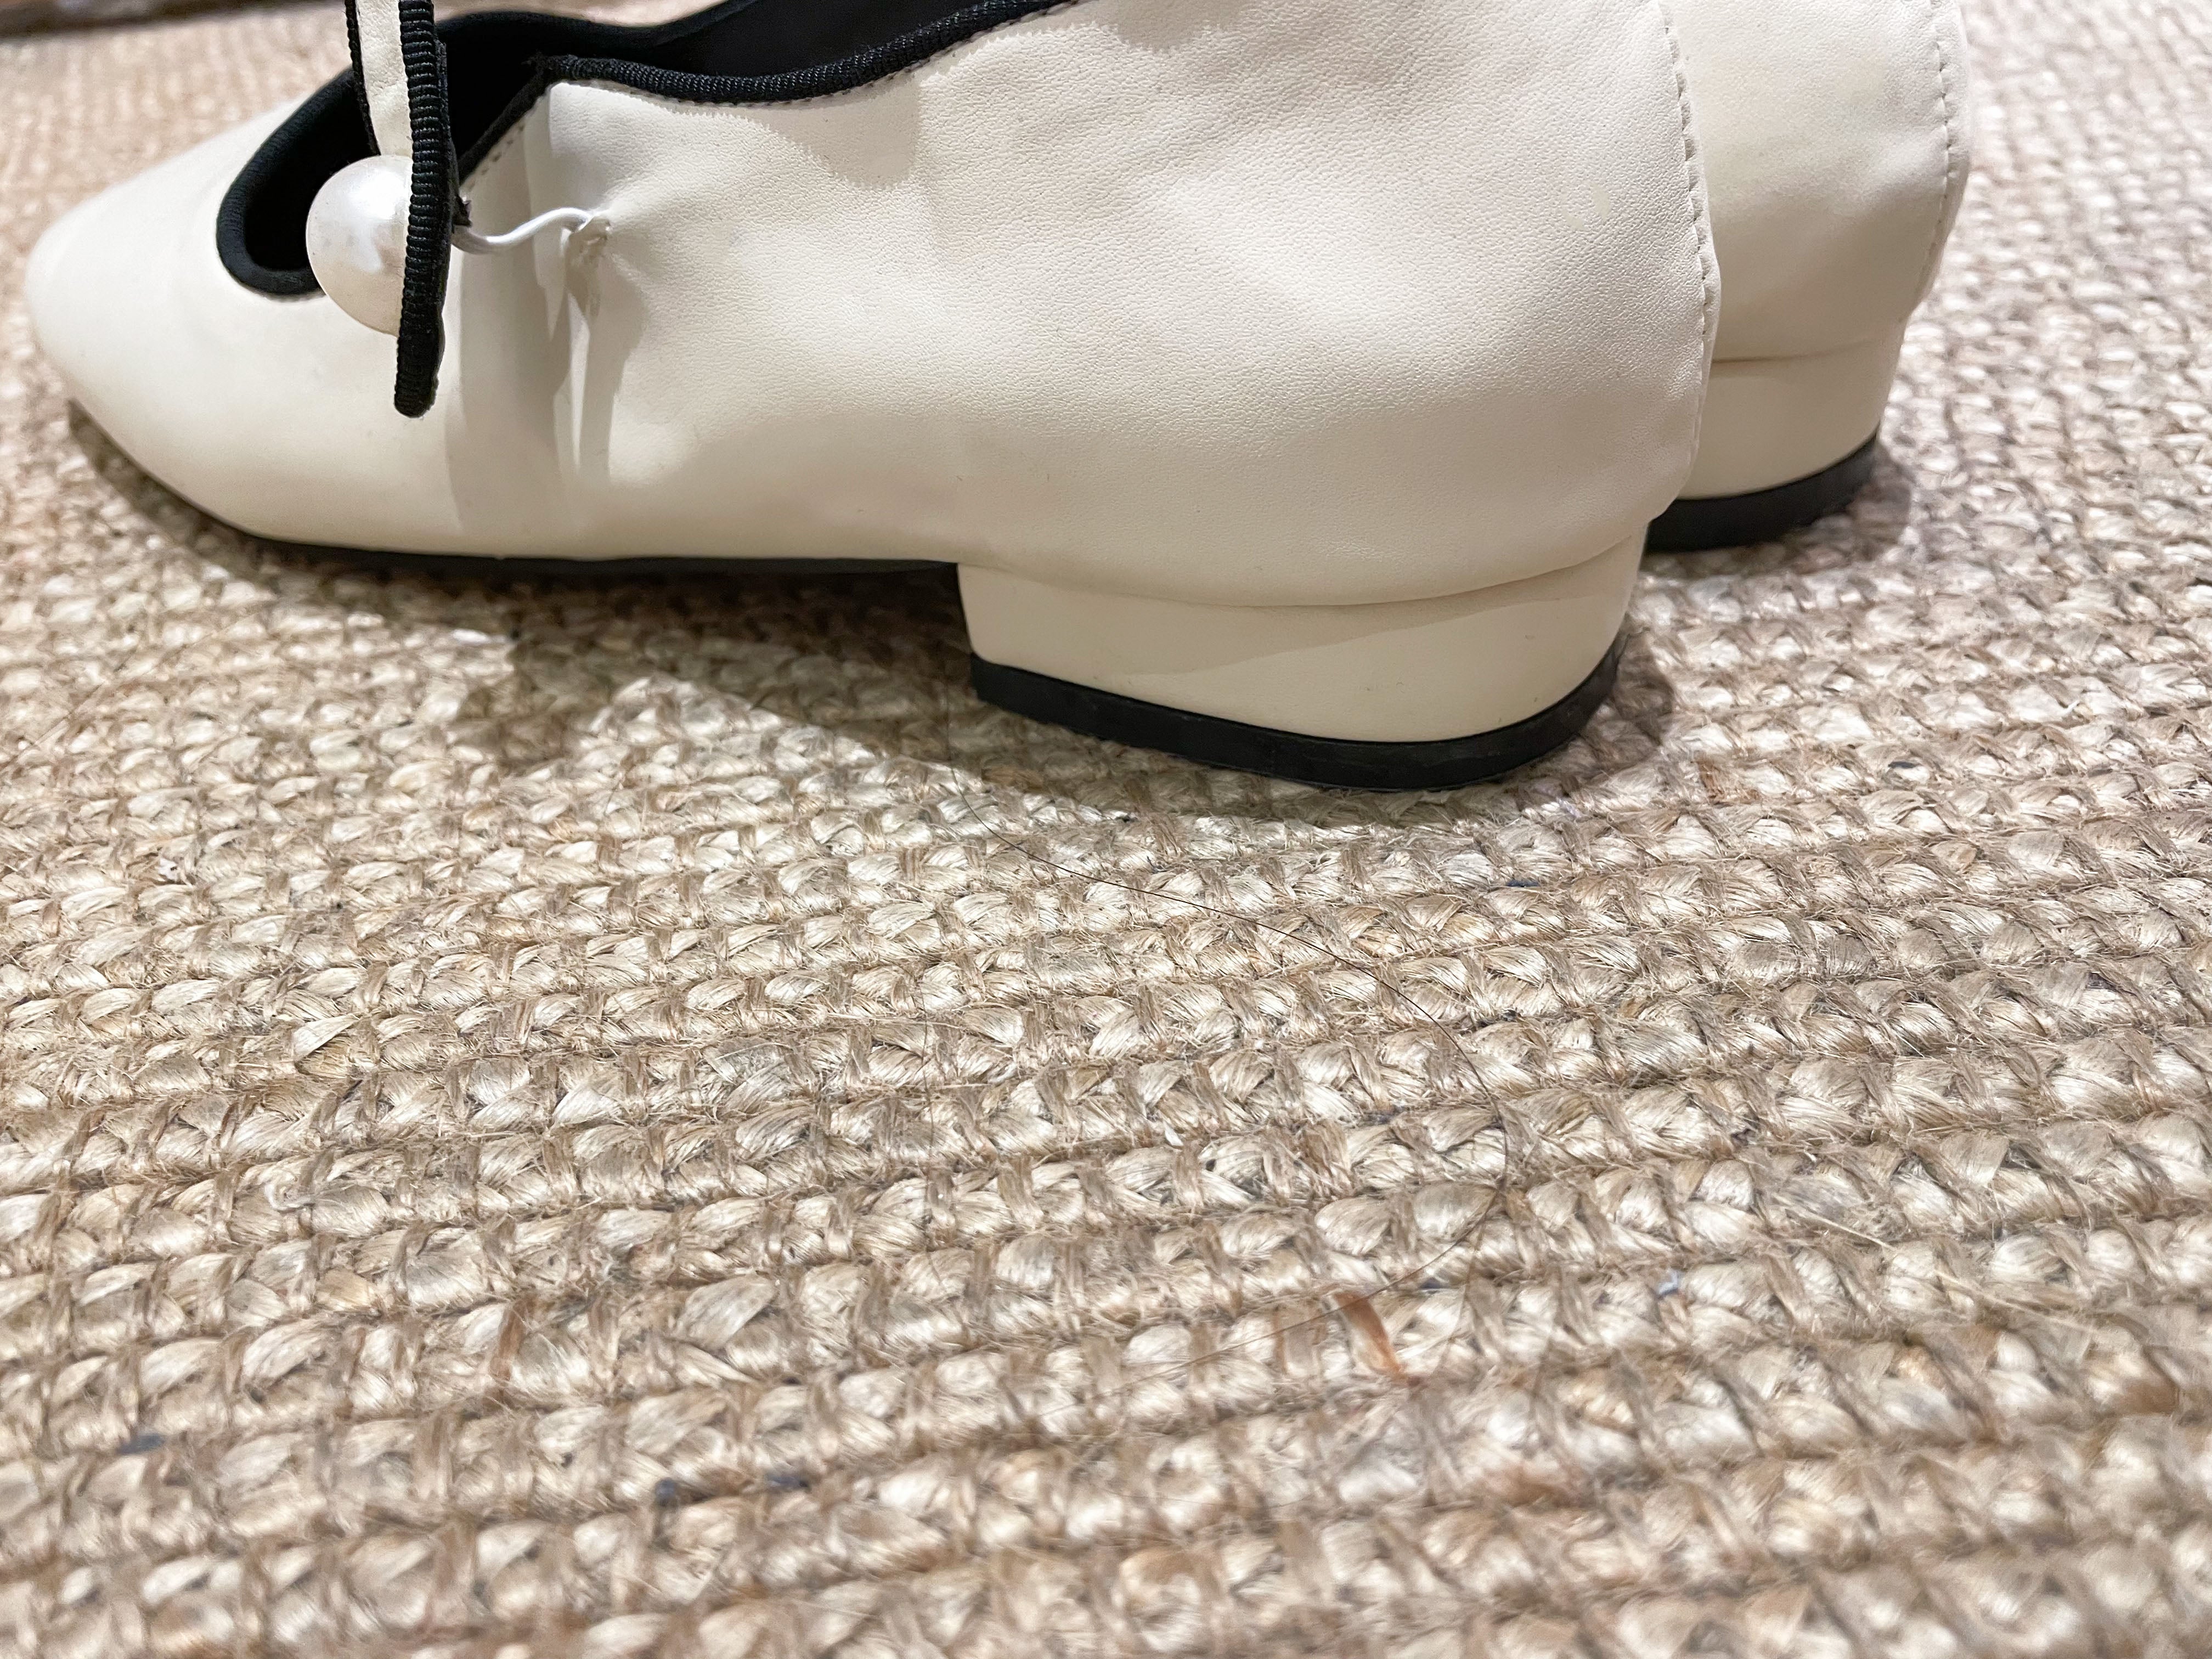 Pearl Jane, Shoes/ SH8109